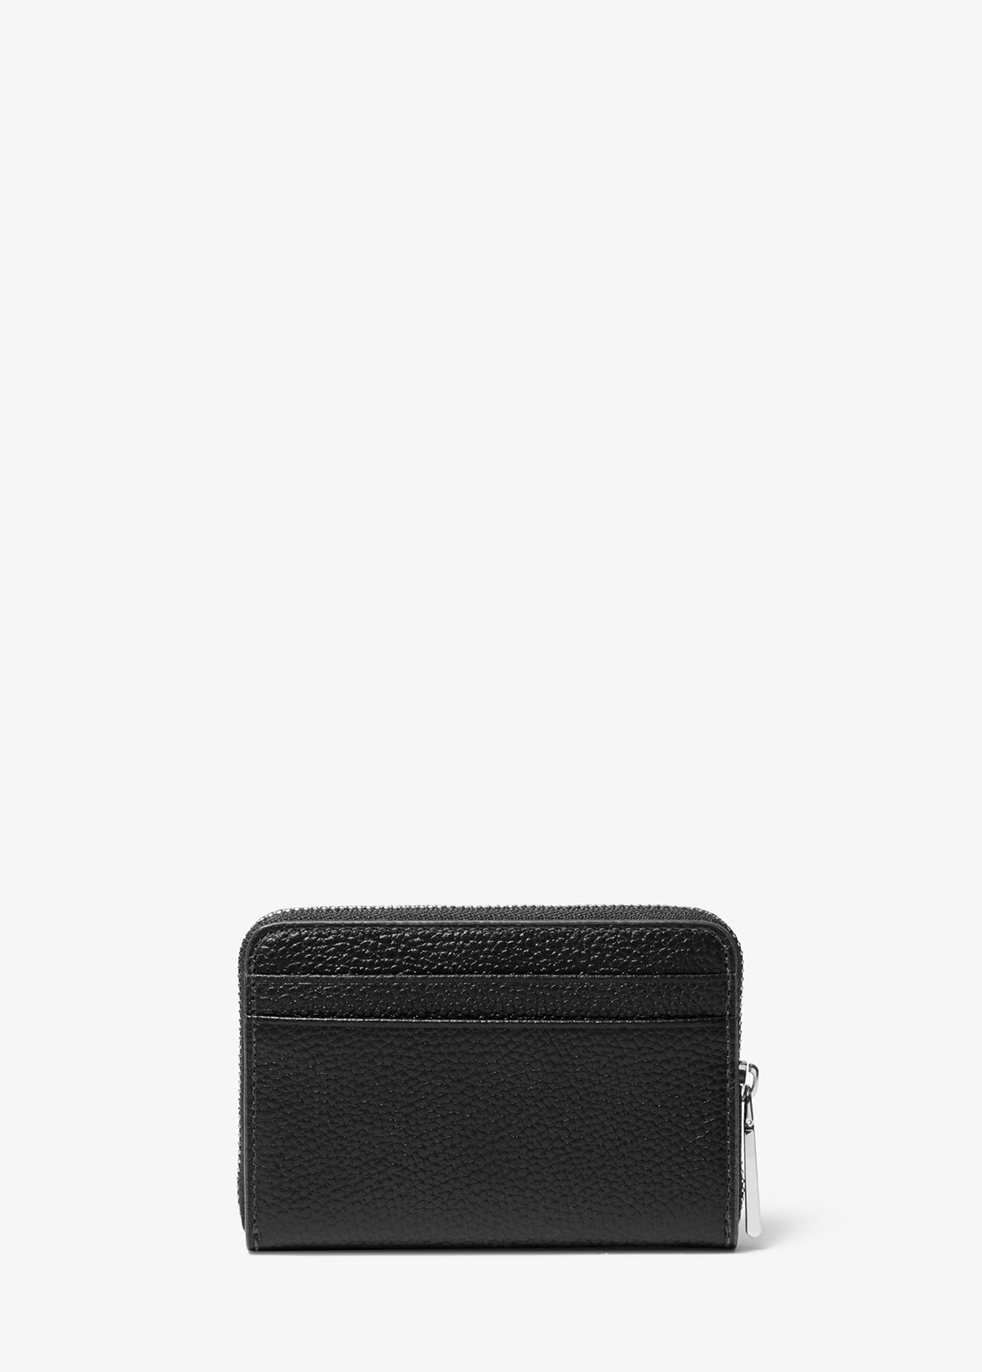 michael kors black small purse